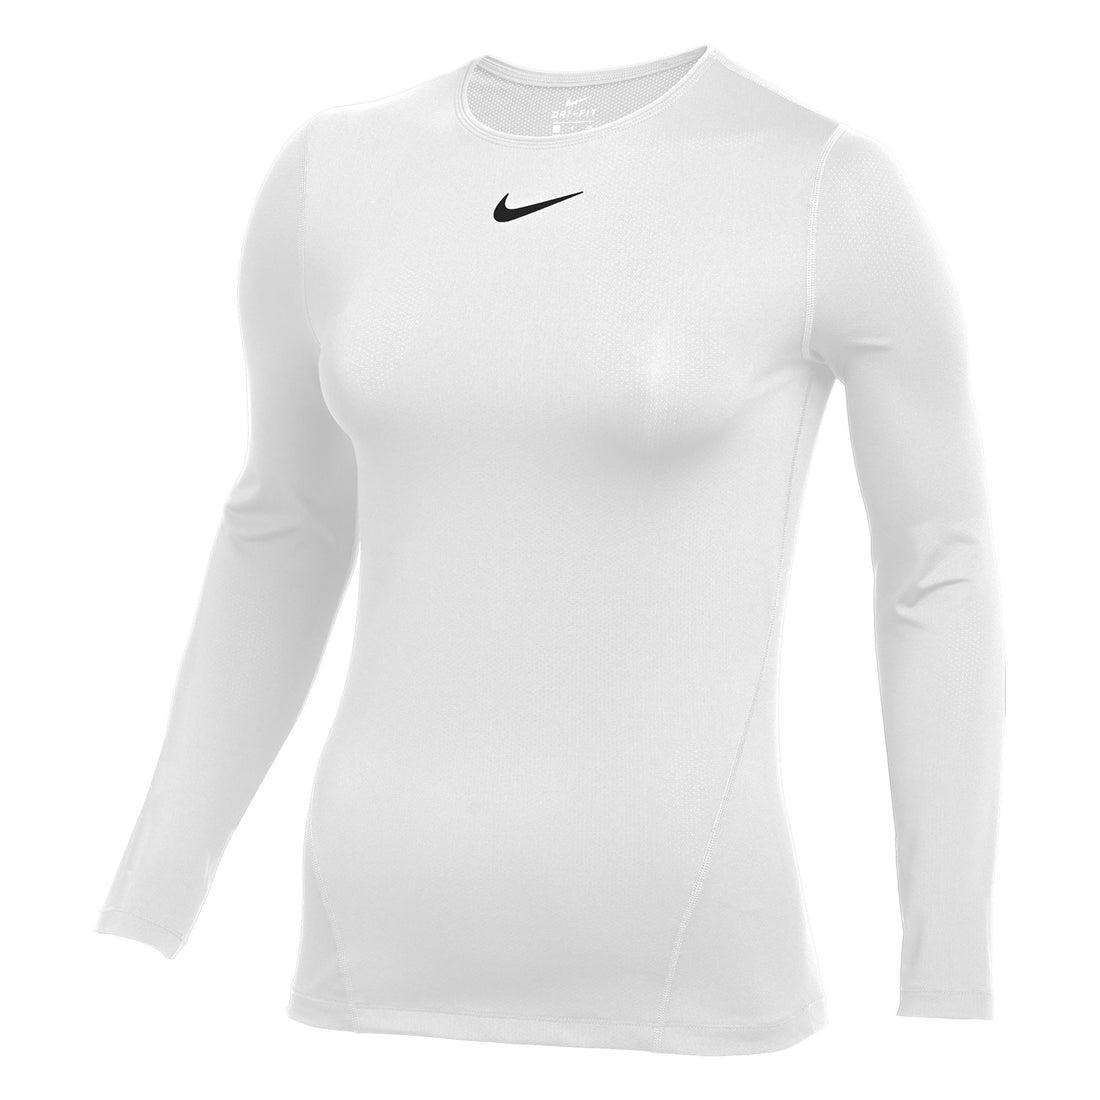 Nike Women's Pro All Over Mesh Training Long Sleeve Top White